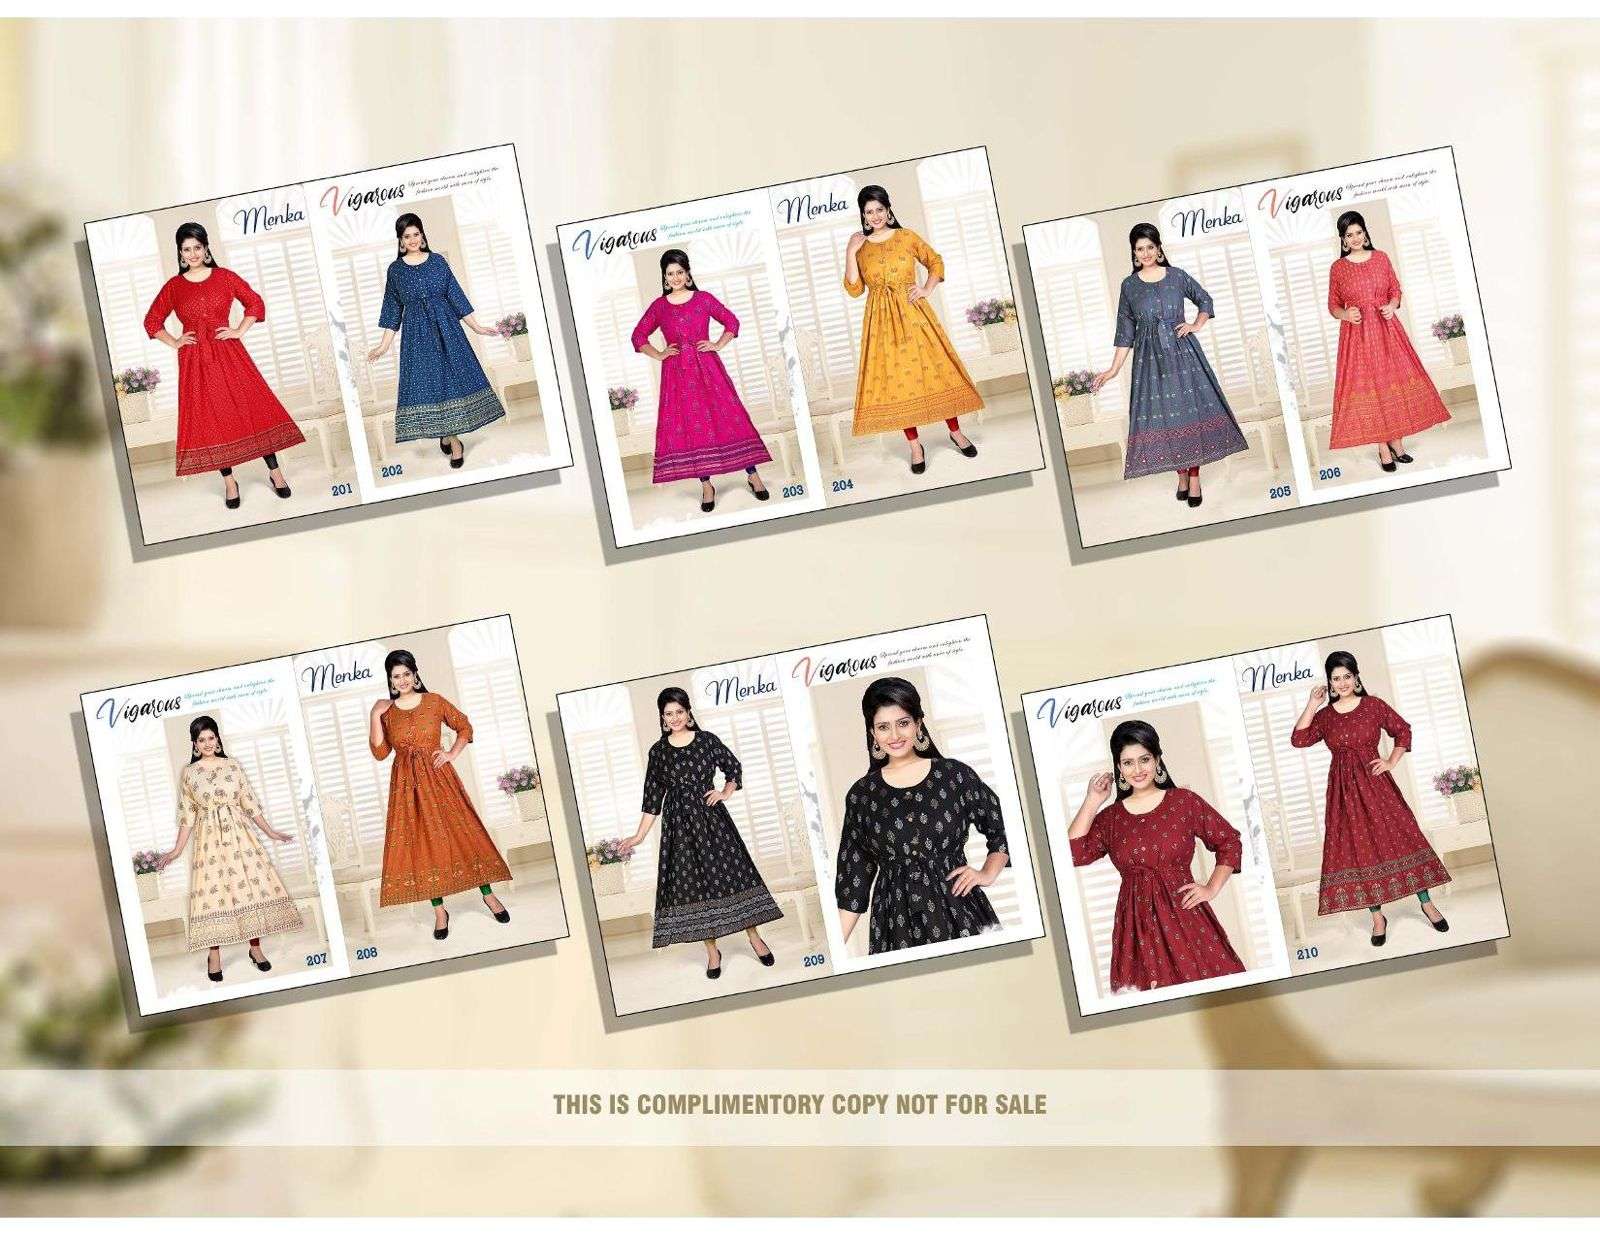 Beauty Menka Vol 2 Catalog Rayon Designer Long Gown Style Kurtis Wholesale